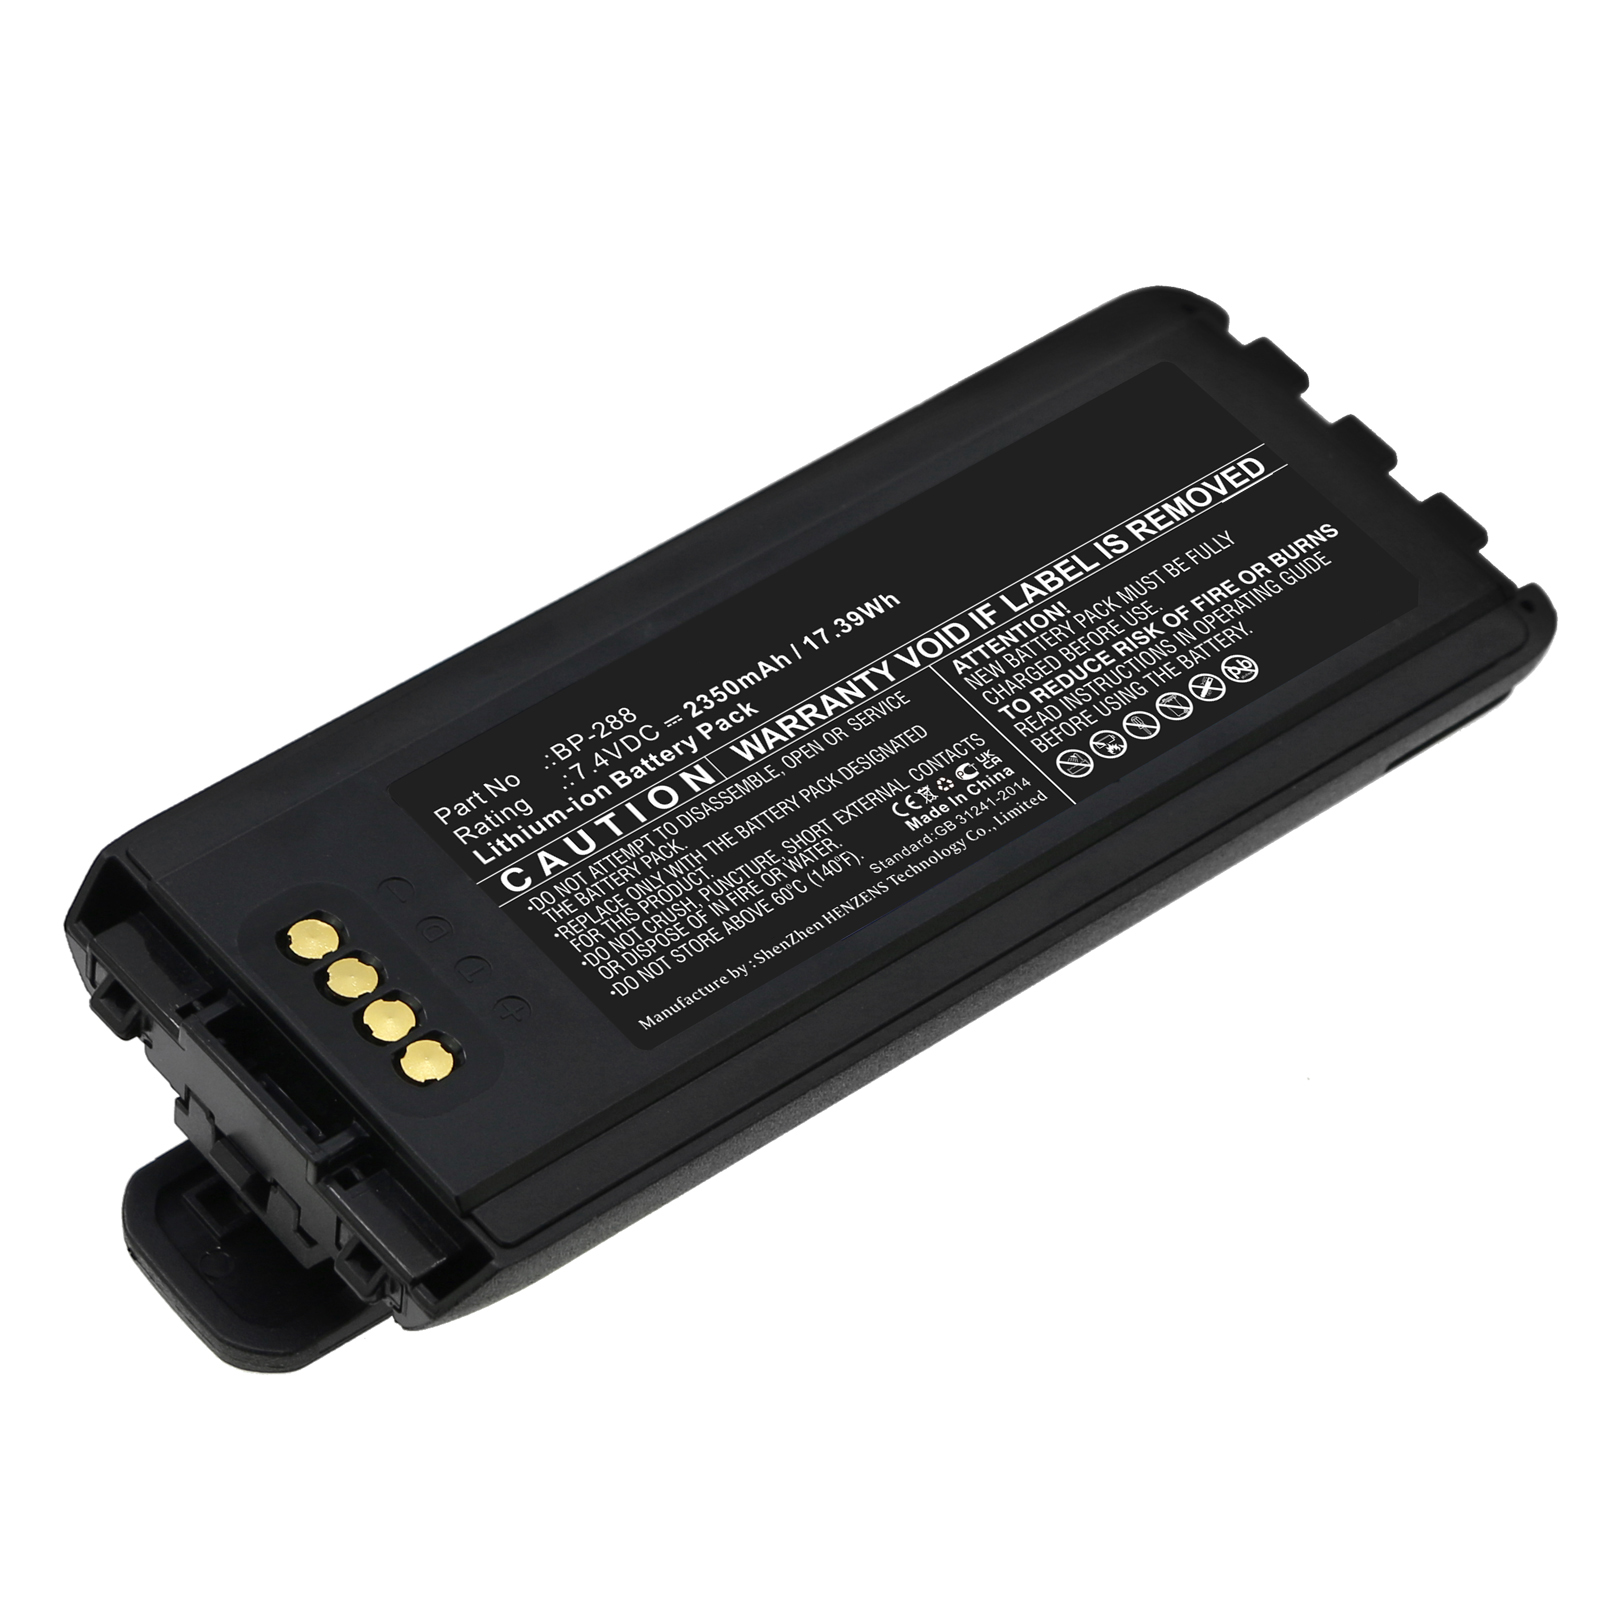 Synergy Digital 2-Way Radio Battery, Compatible with Icom BP-288 2-Way Radio Battery (Li-ion, 7.4V, 2350mAh)